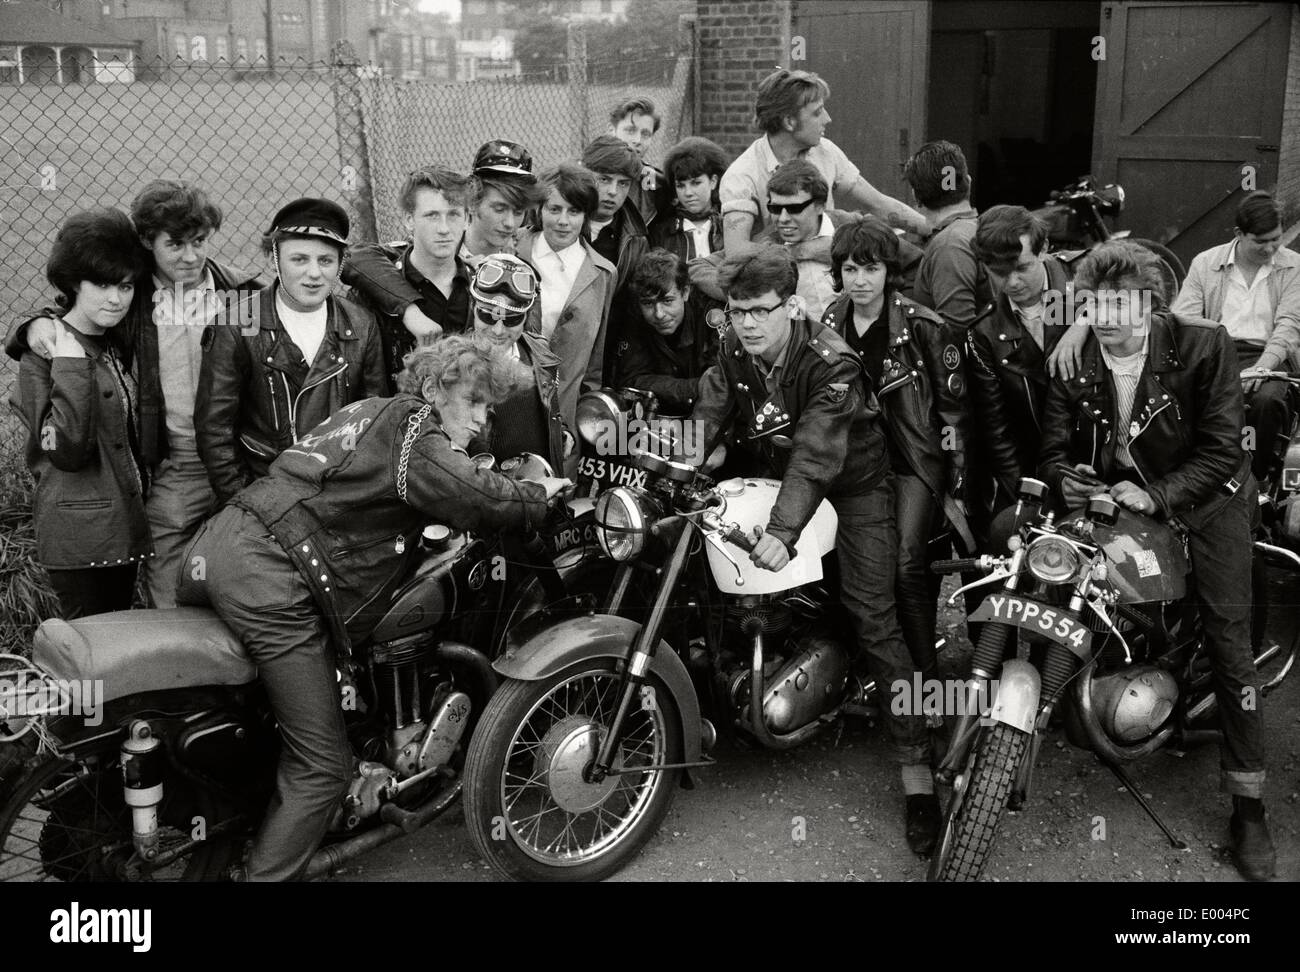 Club de moto dans la banlieue de Londres, 1964 Photo Stock - Alamy